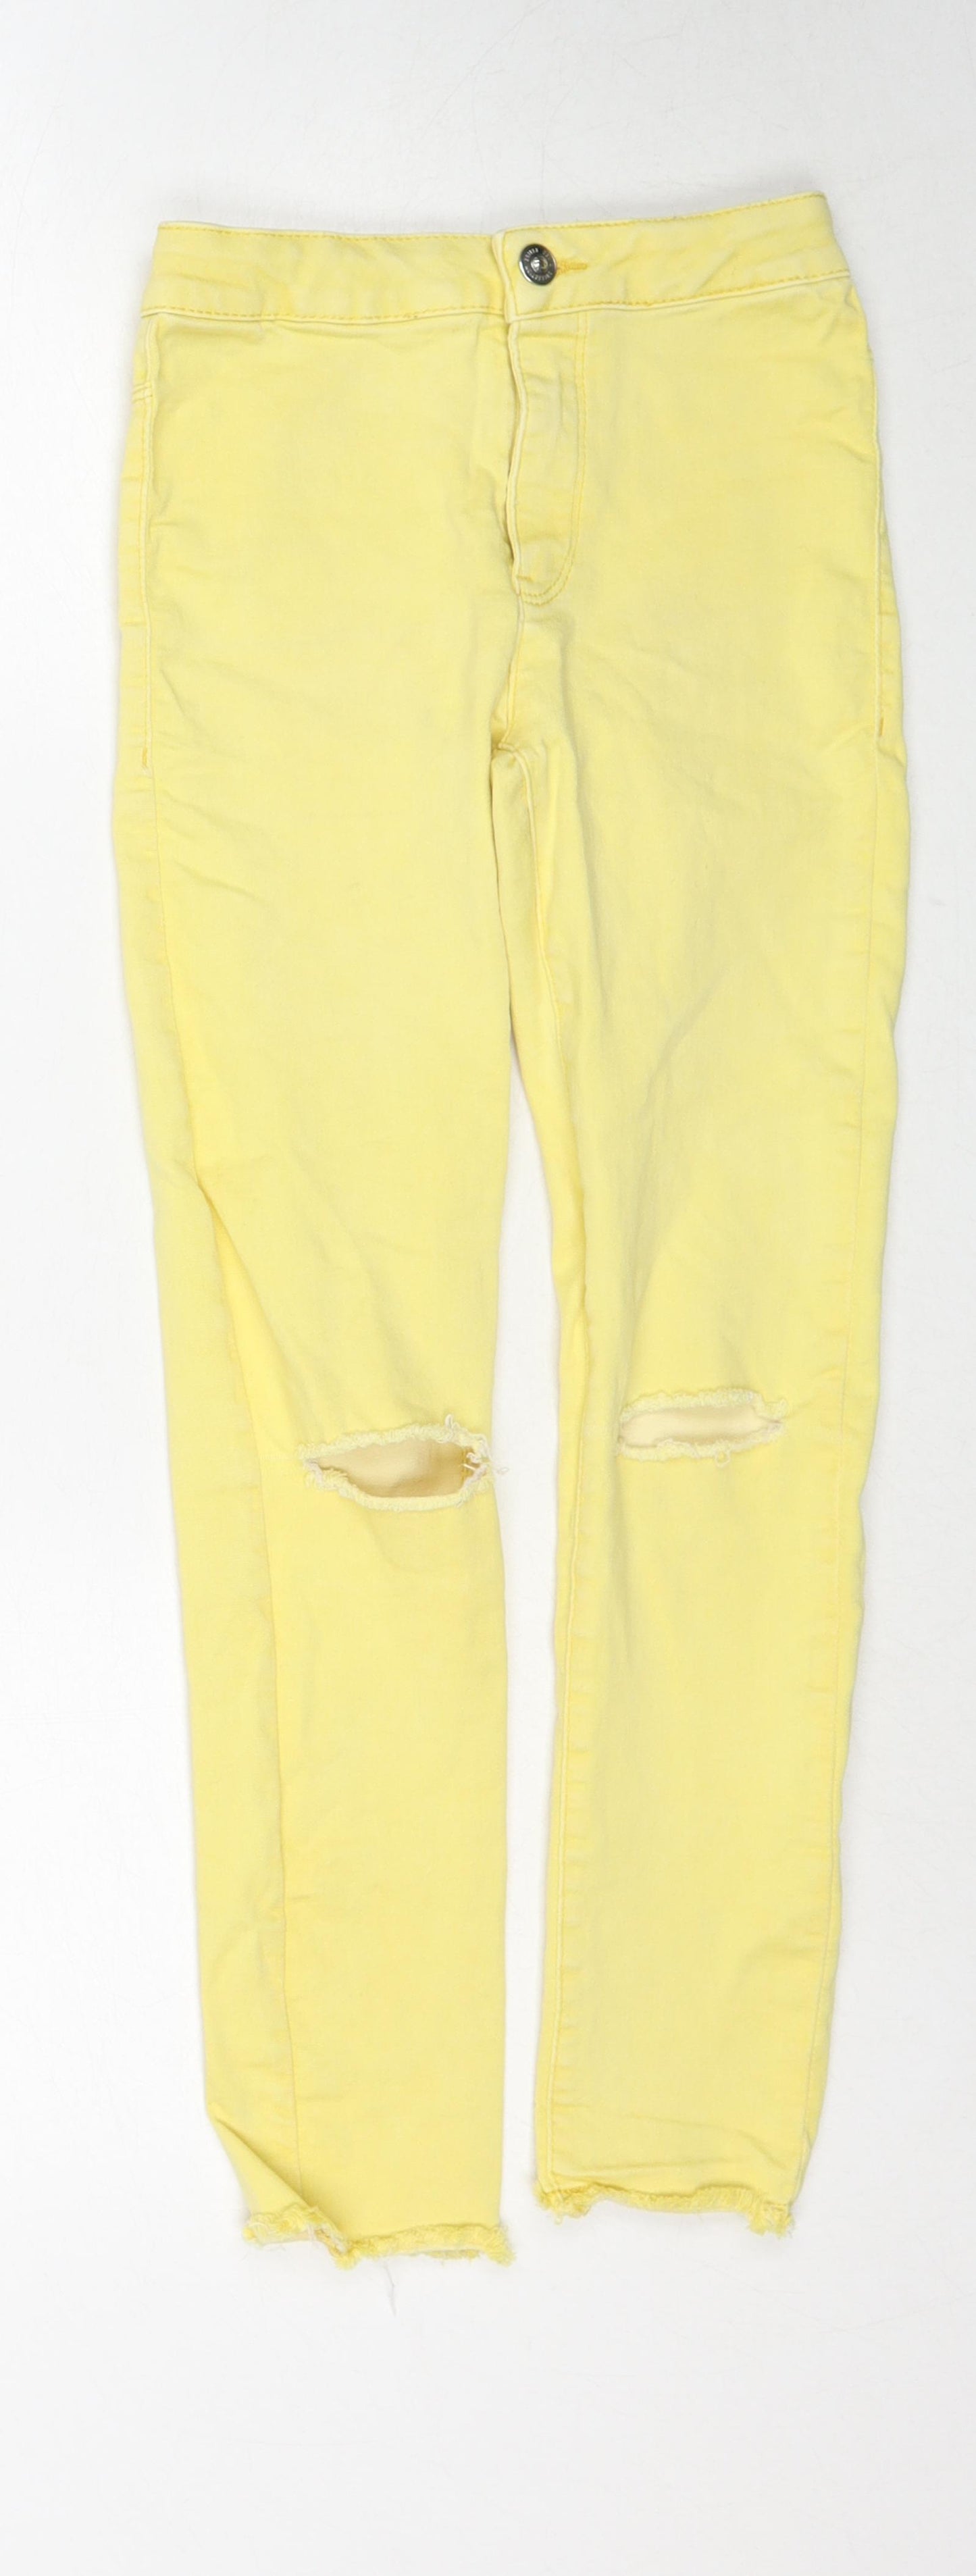 Zara Girls Yellow Cotton Straight Jeans Size 9 Years Regular Zip - Distressed